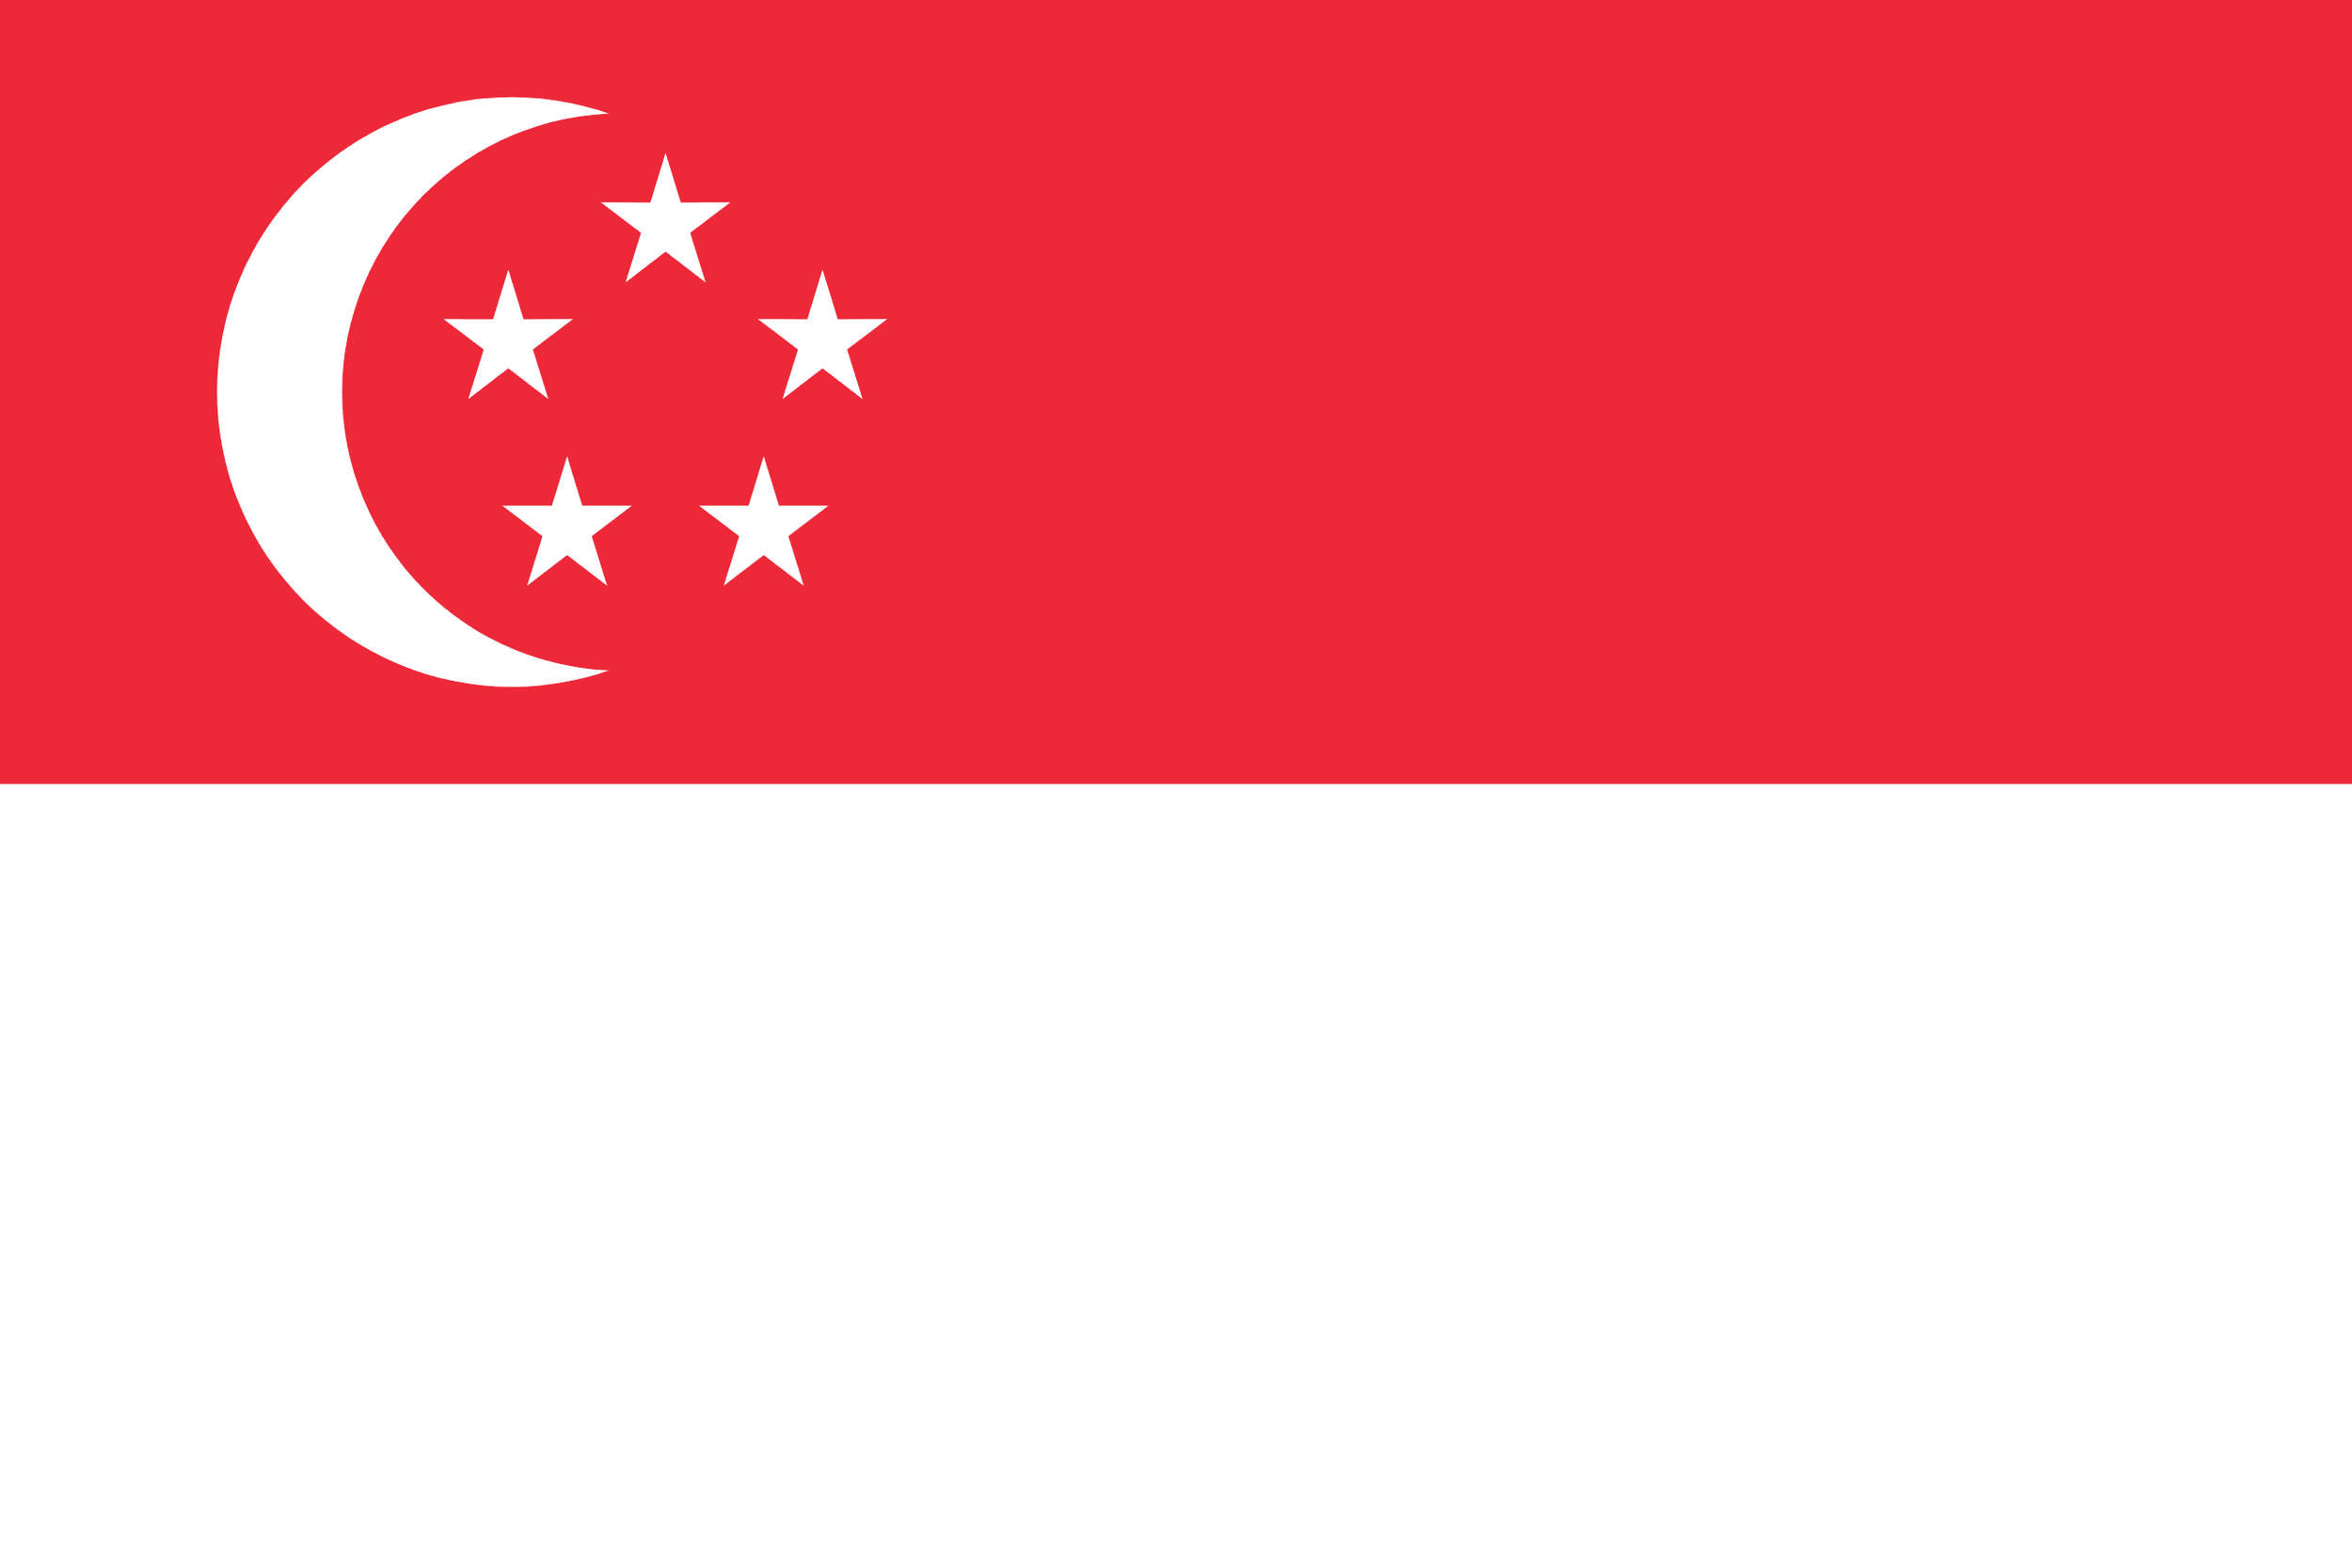 H.E. Lui Tuck Yew - Singapore